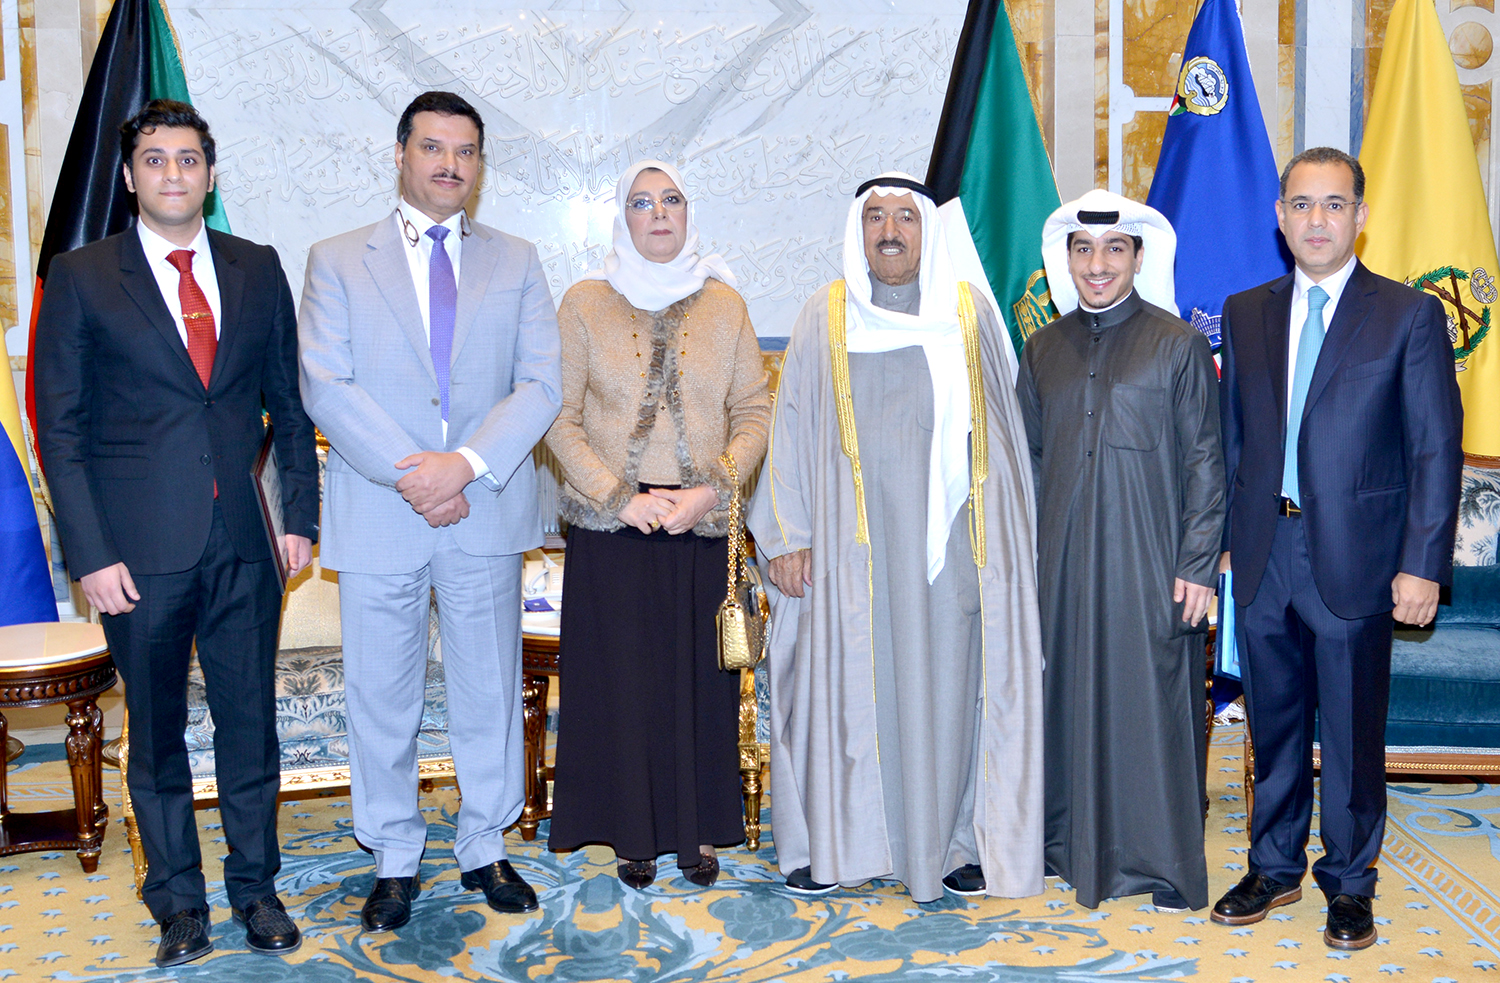 His Highness the Amir Sheikh Sabah Al-Ahmad Al-Jaber Al-Sabah with Minister of Health Dr. Jamal Al-Harbi and Dr.Abdulrazzaq Al-Obaid, Dr.Fawzia Al-Kandari , Dr.Jawad Abu Al-Hasan and Dr.Ziyad Al-Kandari